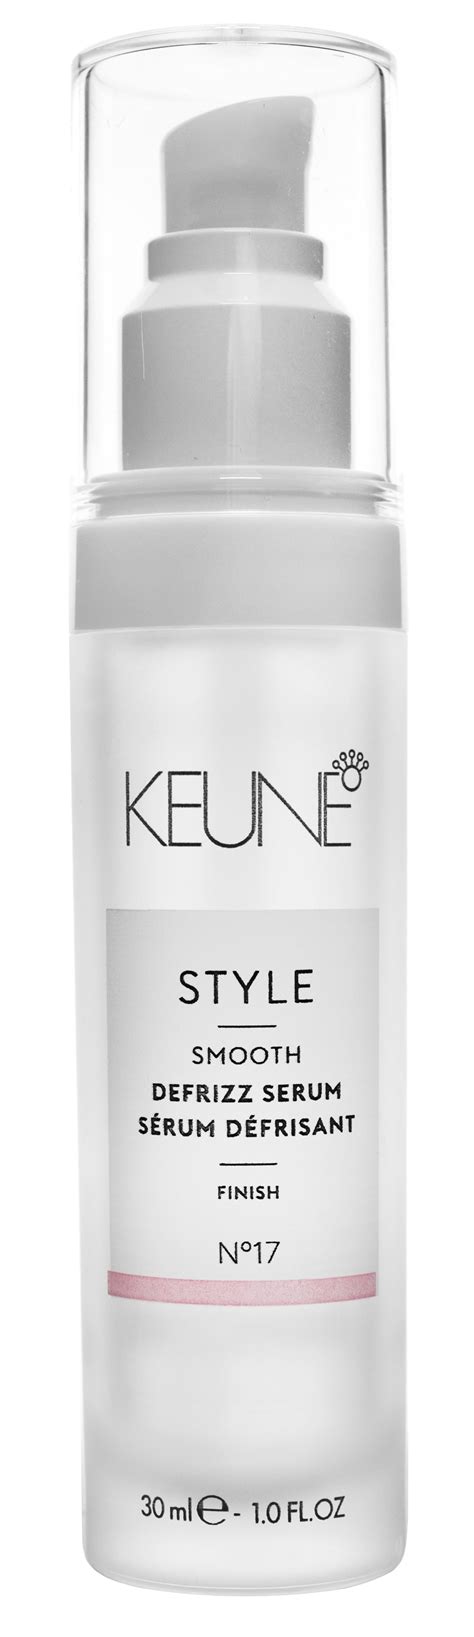 Keune - Keune Style, Defrizz Serum - 1.0 fl oz (30ml) - Walmart.com ...